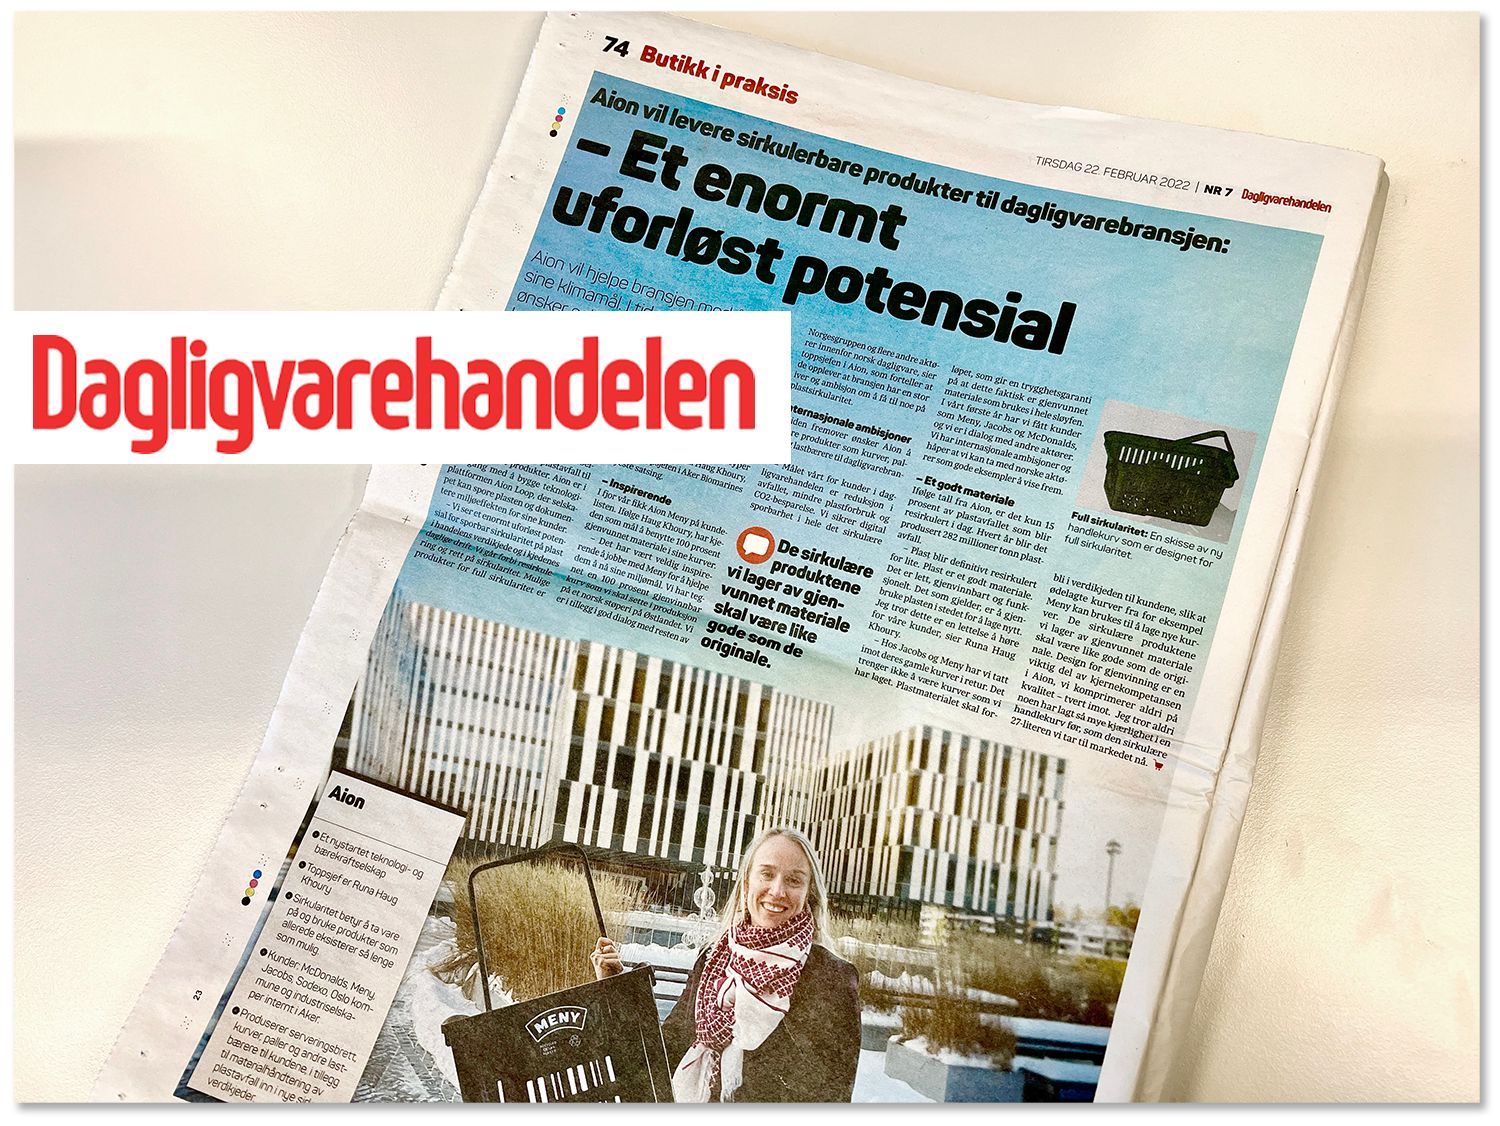 Interview with AION's CEO Runa Haug Khoury in the newspaper Dagligvarehandelen